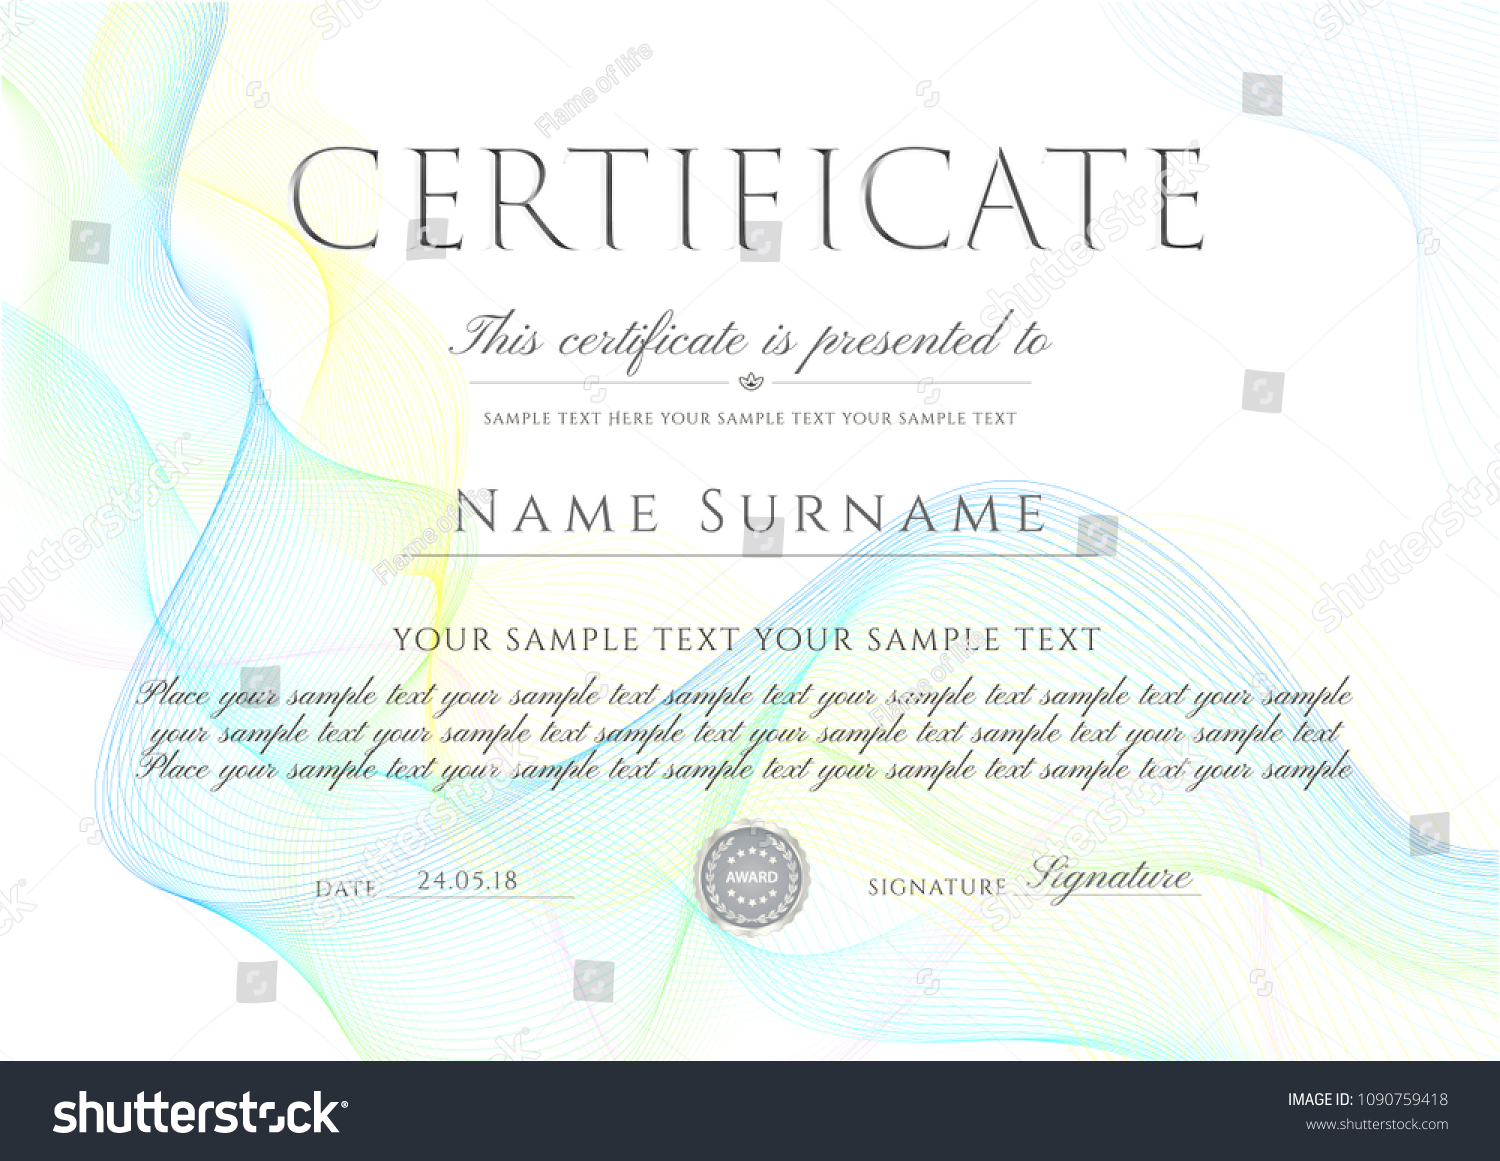 Certificate Template Printable Editable Design Diploma Stock With Life Membership Certificate Templates